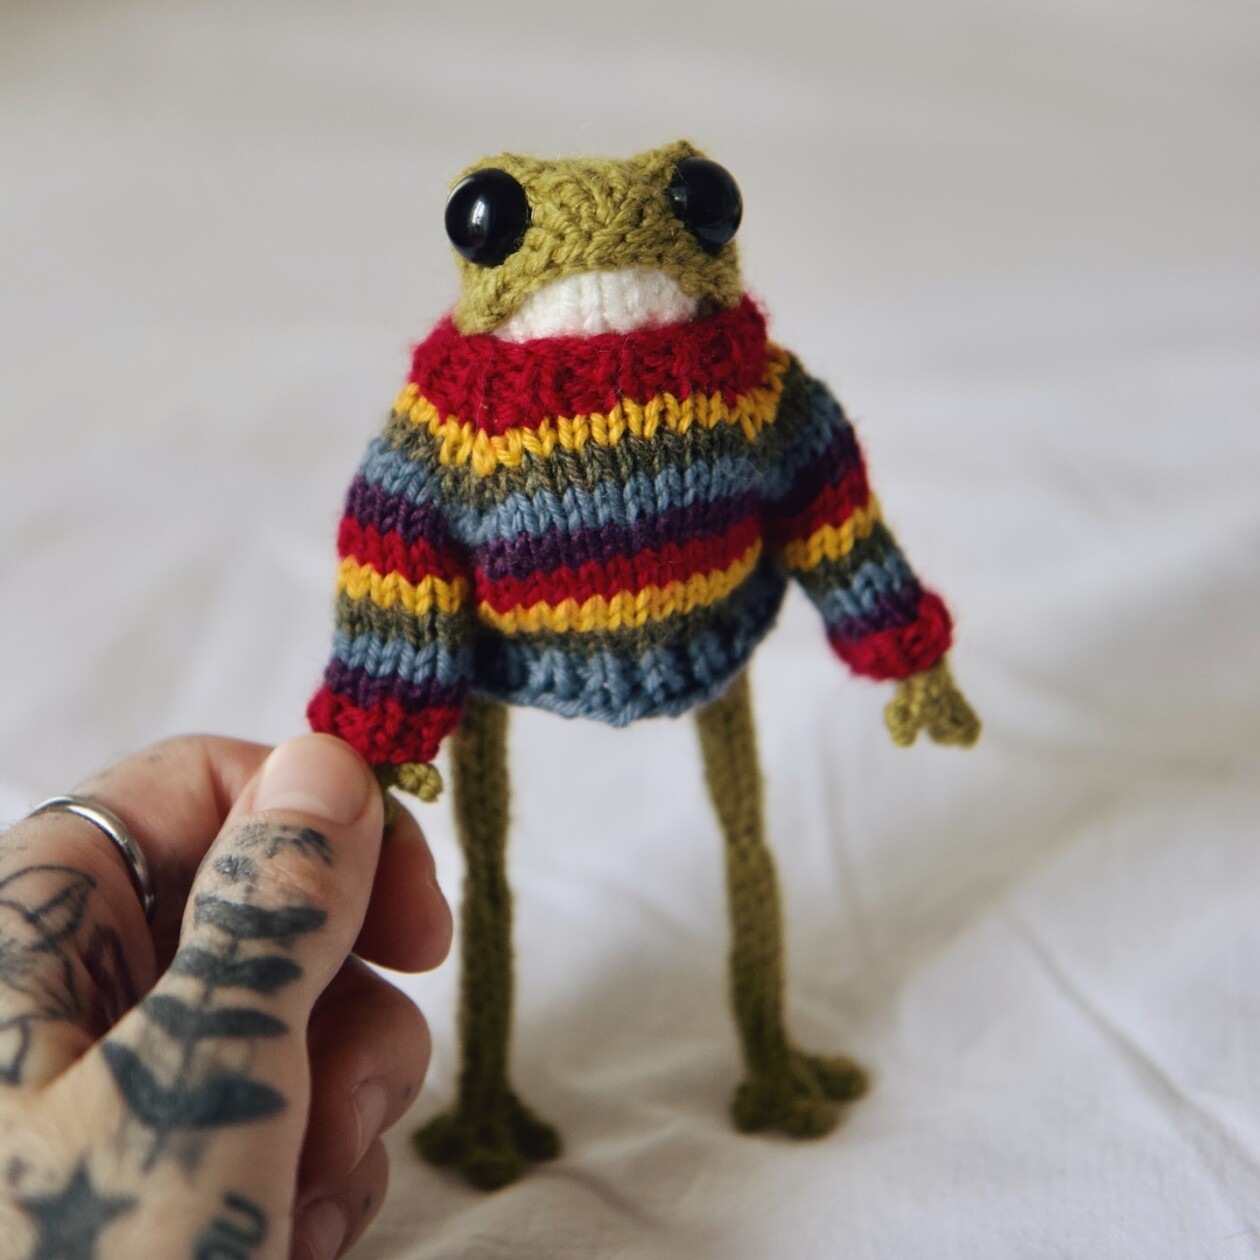 Enchanting Anthropomorphized Frog Crochet Patterns By Elliot (14)